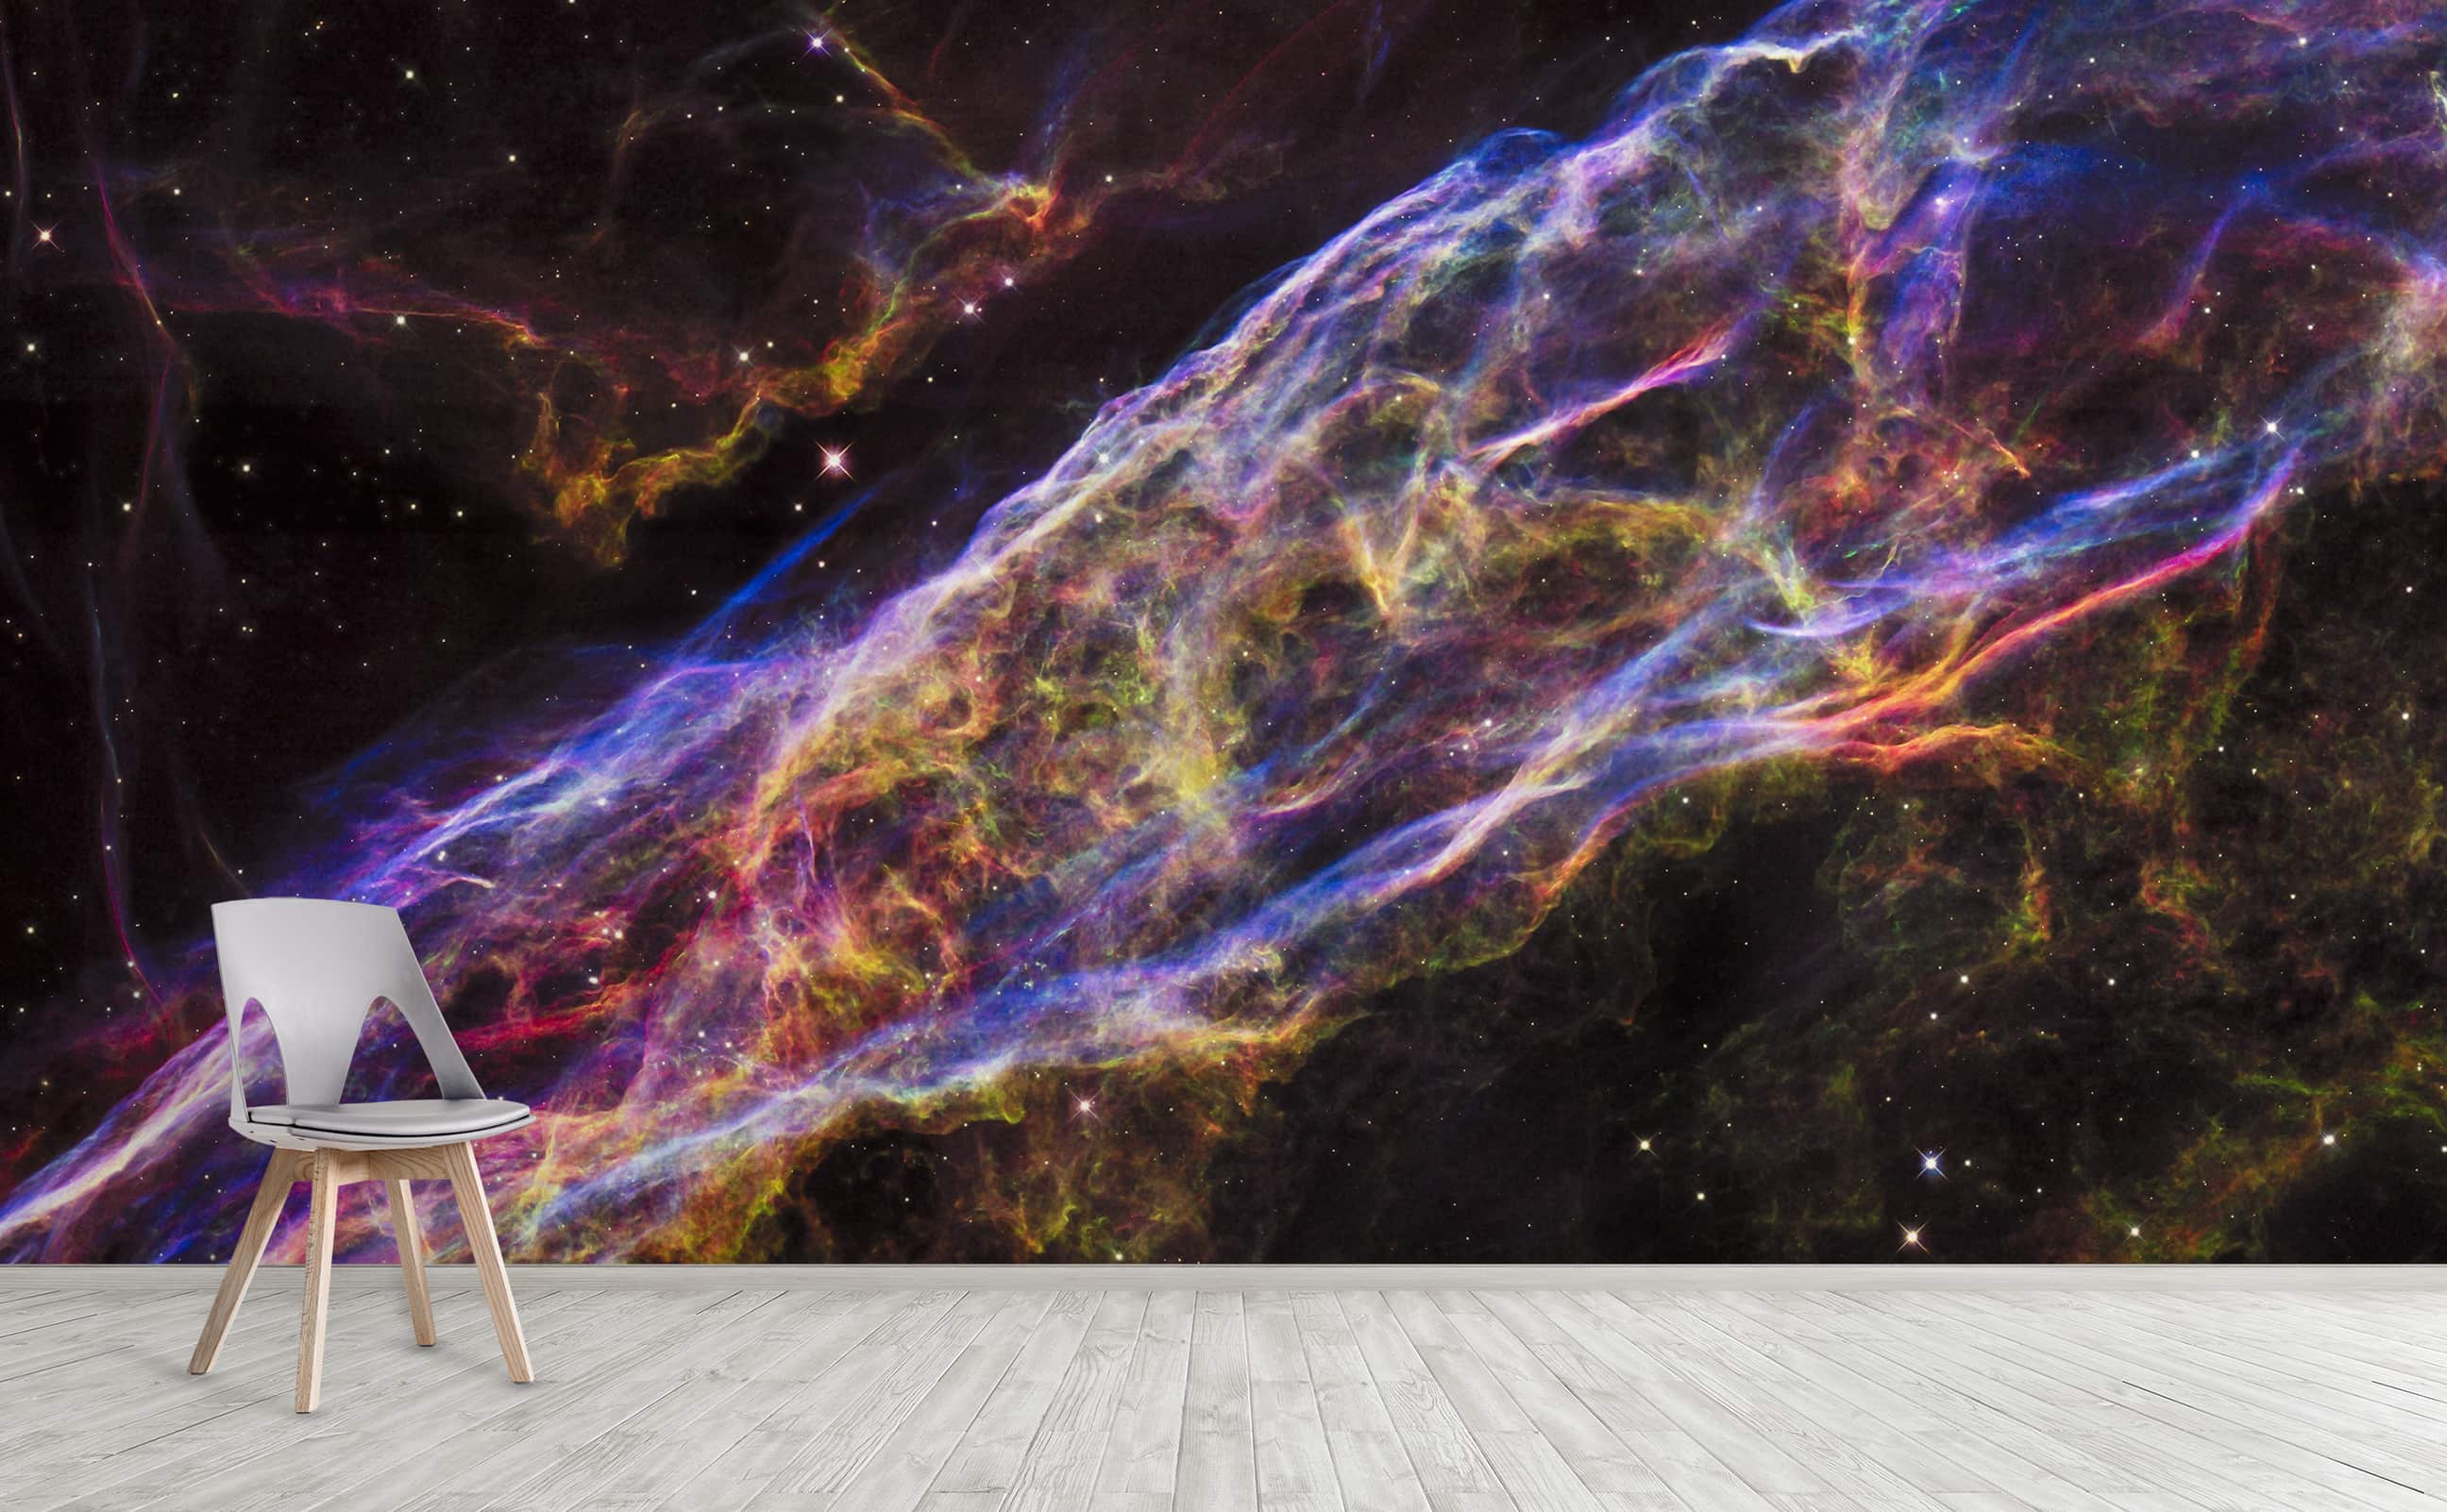 Veil Nebula Wall Mural by Walls Need LoveÂ®